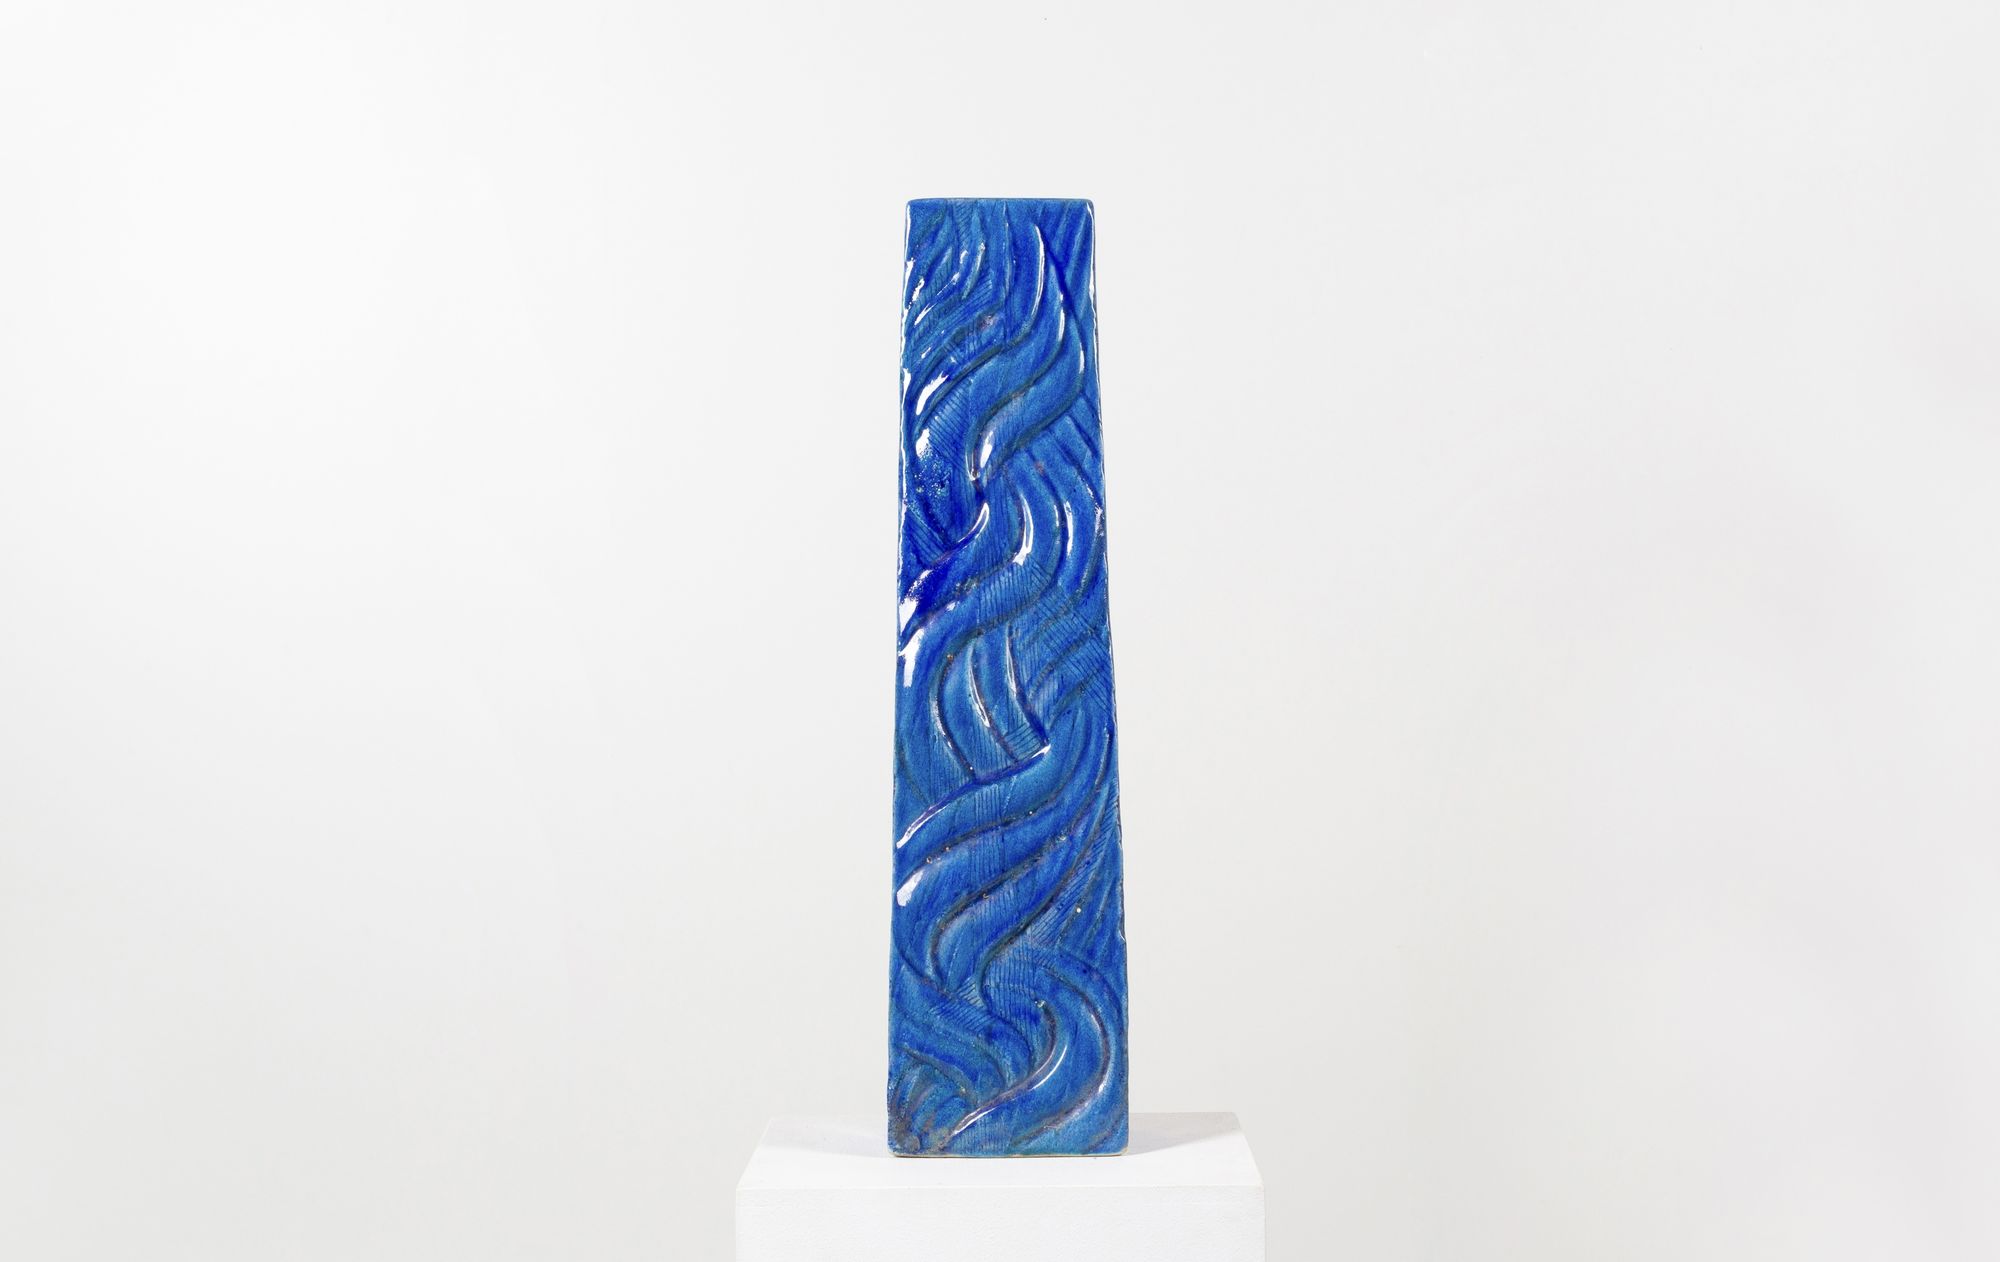 Ceramic "rivière" stele by ceramist Claude Presset